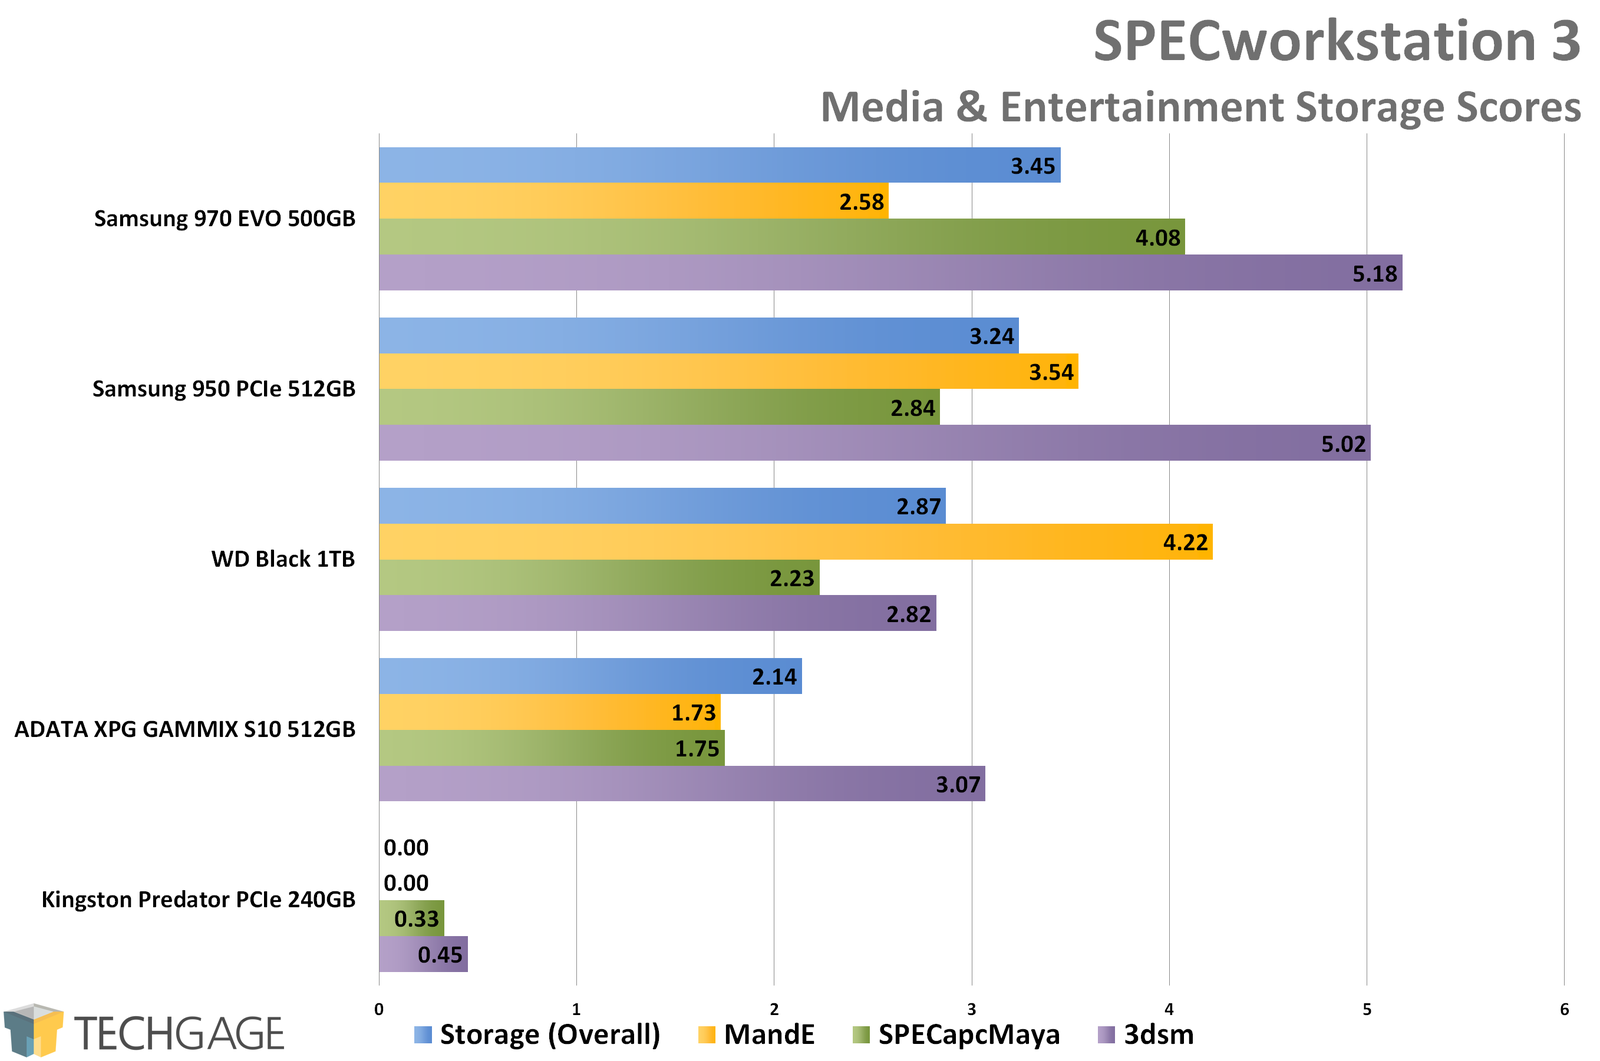 SPECworkstation 3 - Media and Entertainment Storage Scores